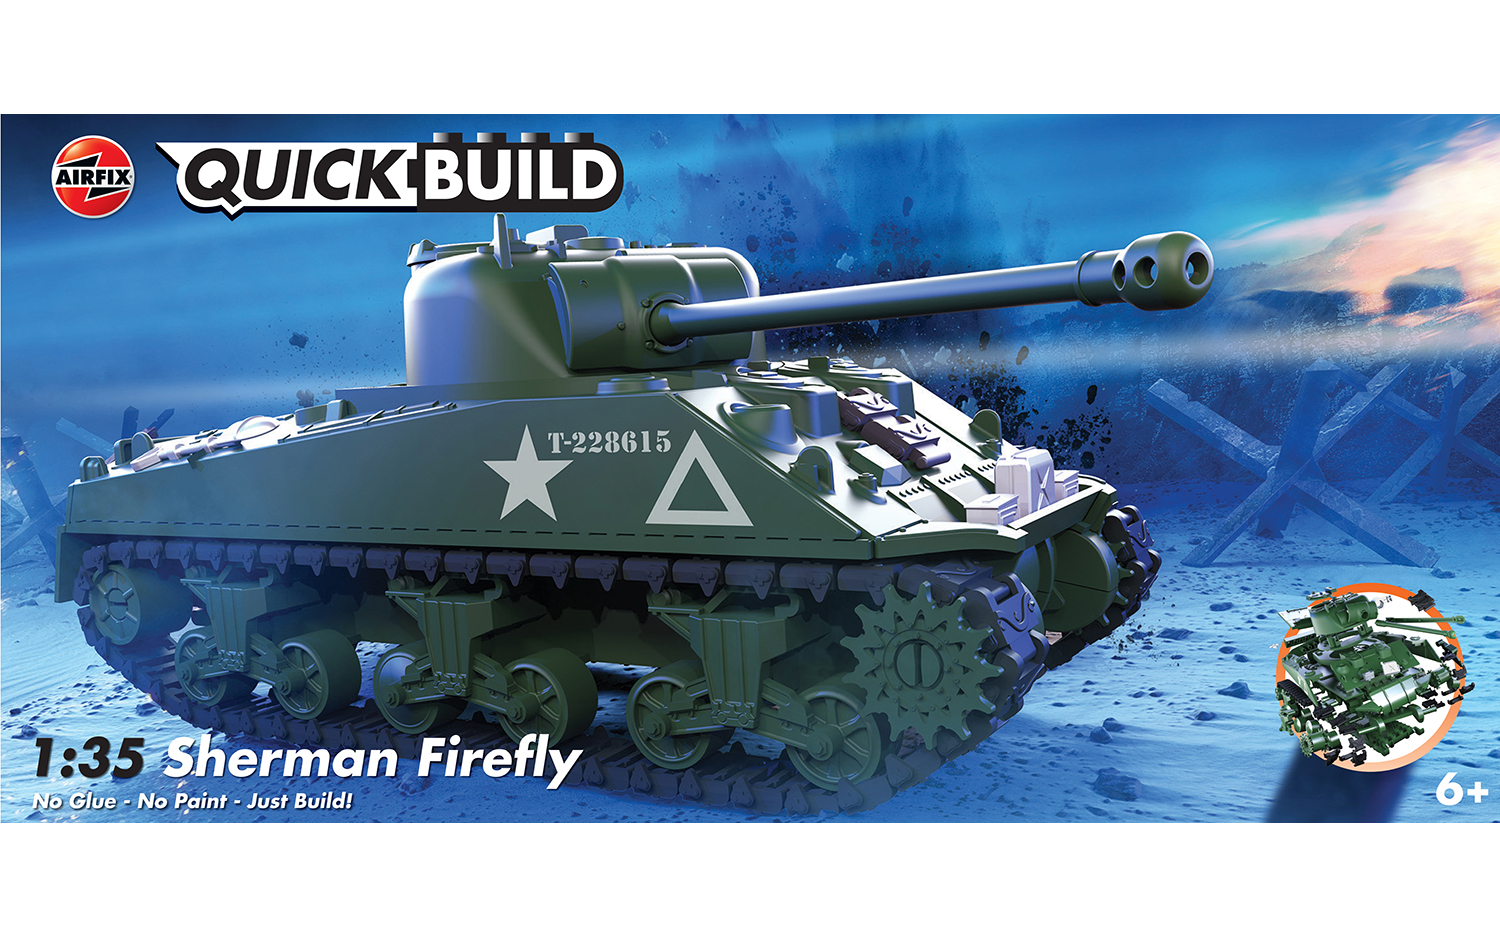 Airfix  Quick Build 1/35th J6042  Sherman Firefly